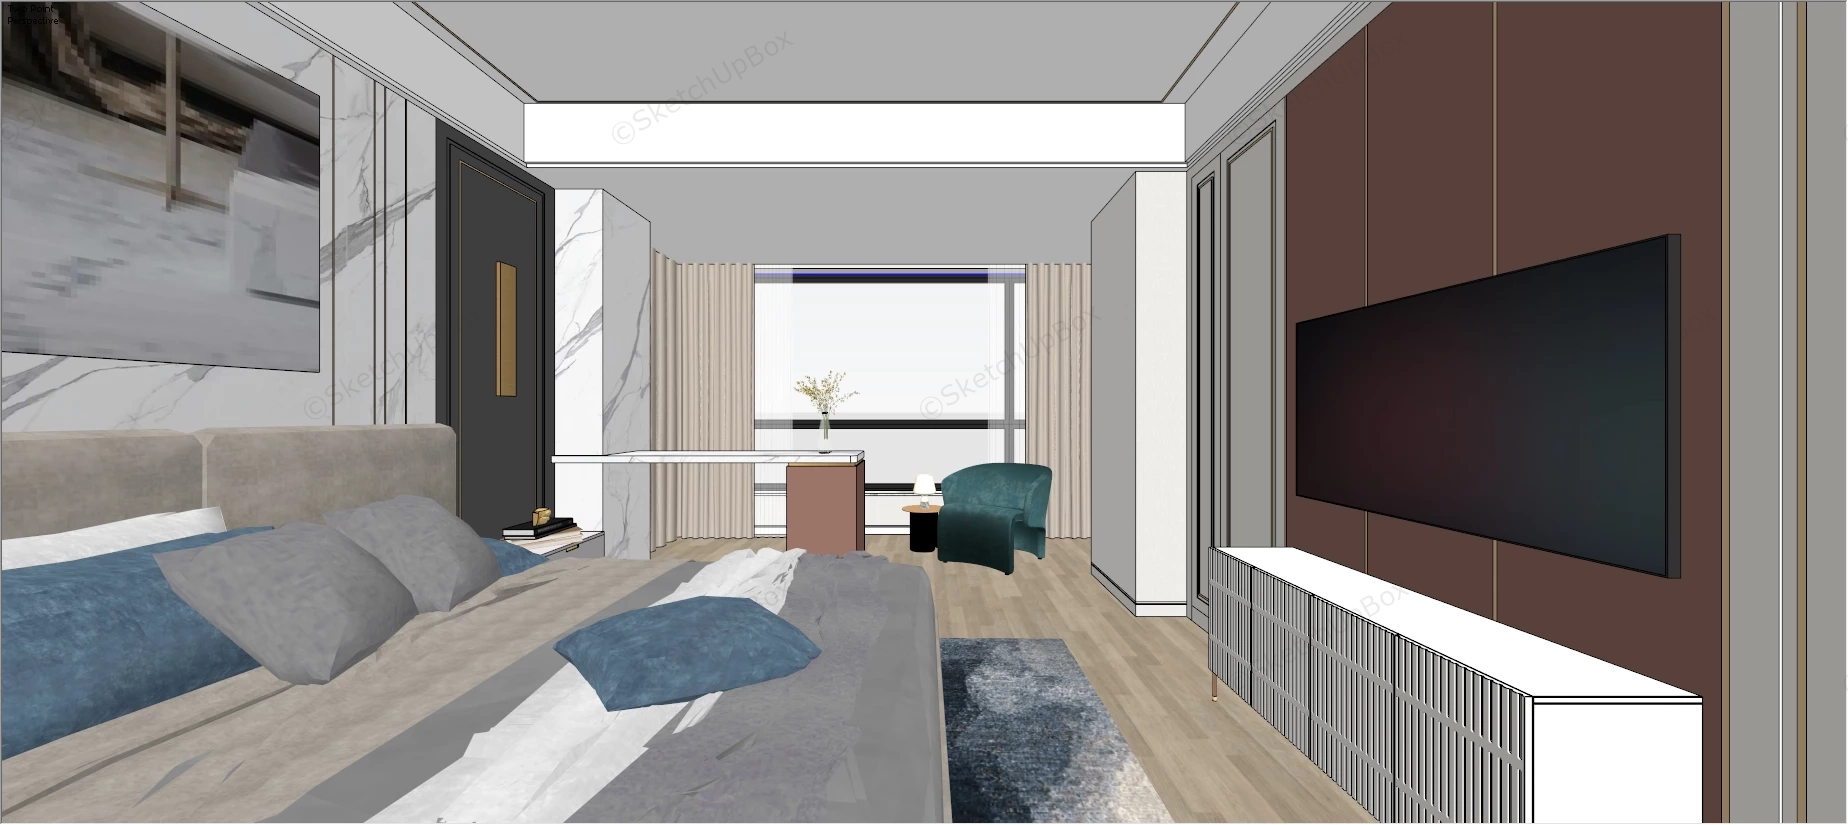 2 Bedroom Apartment Interior Design sketchup model preview - SketchupBox